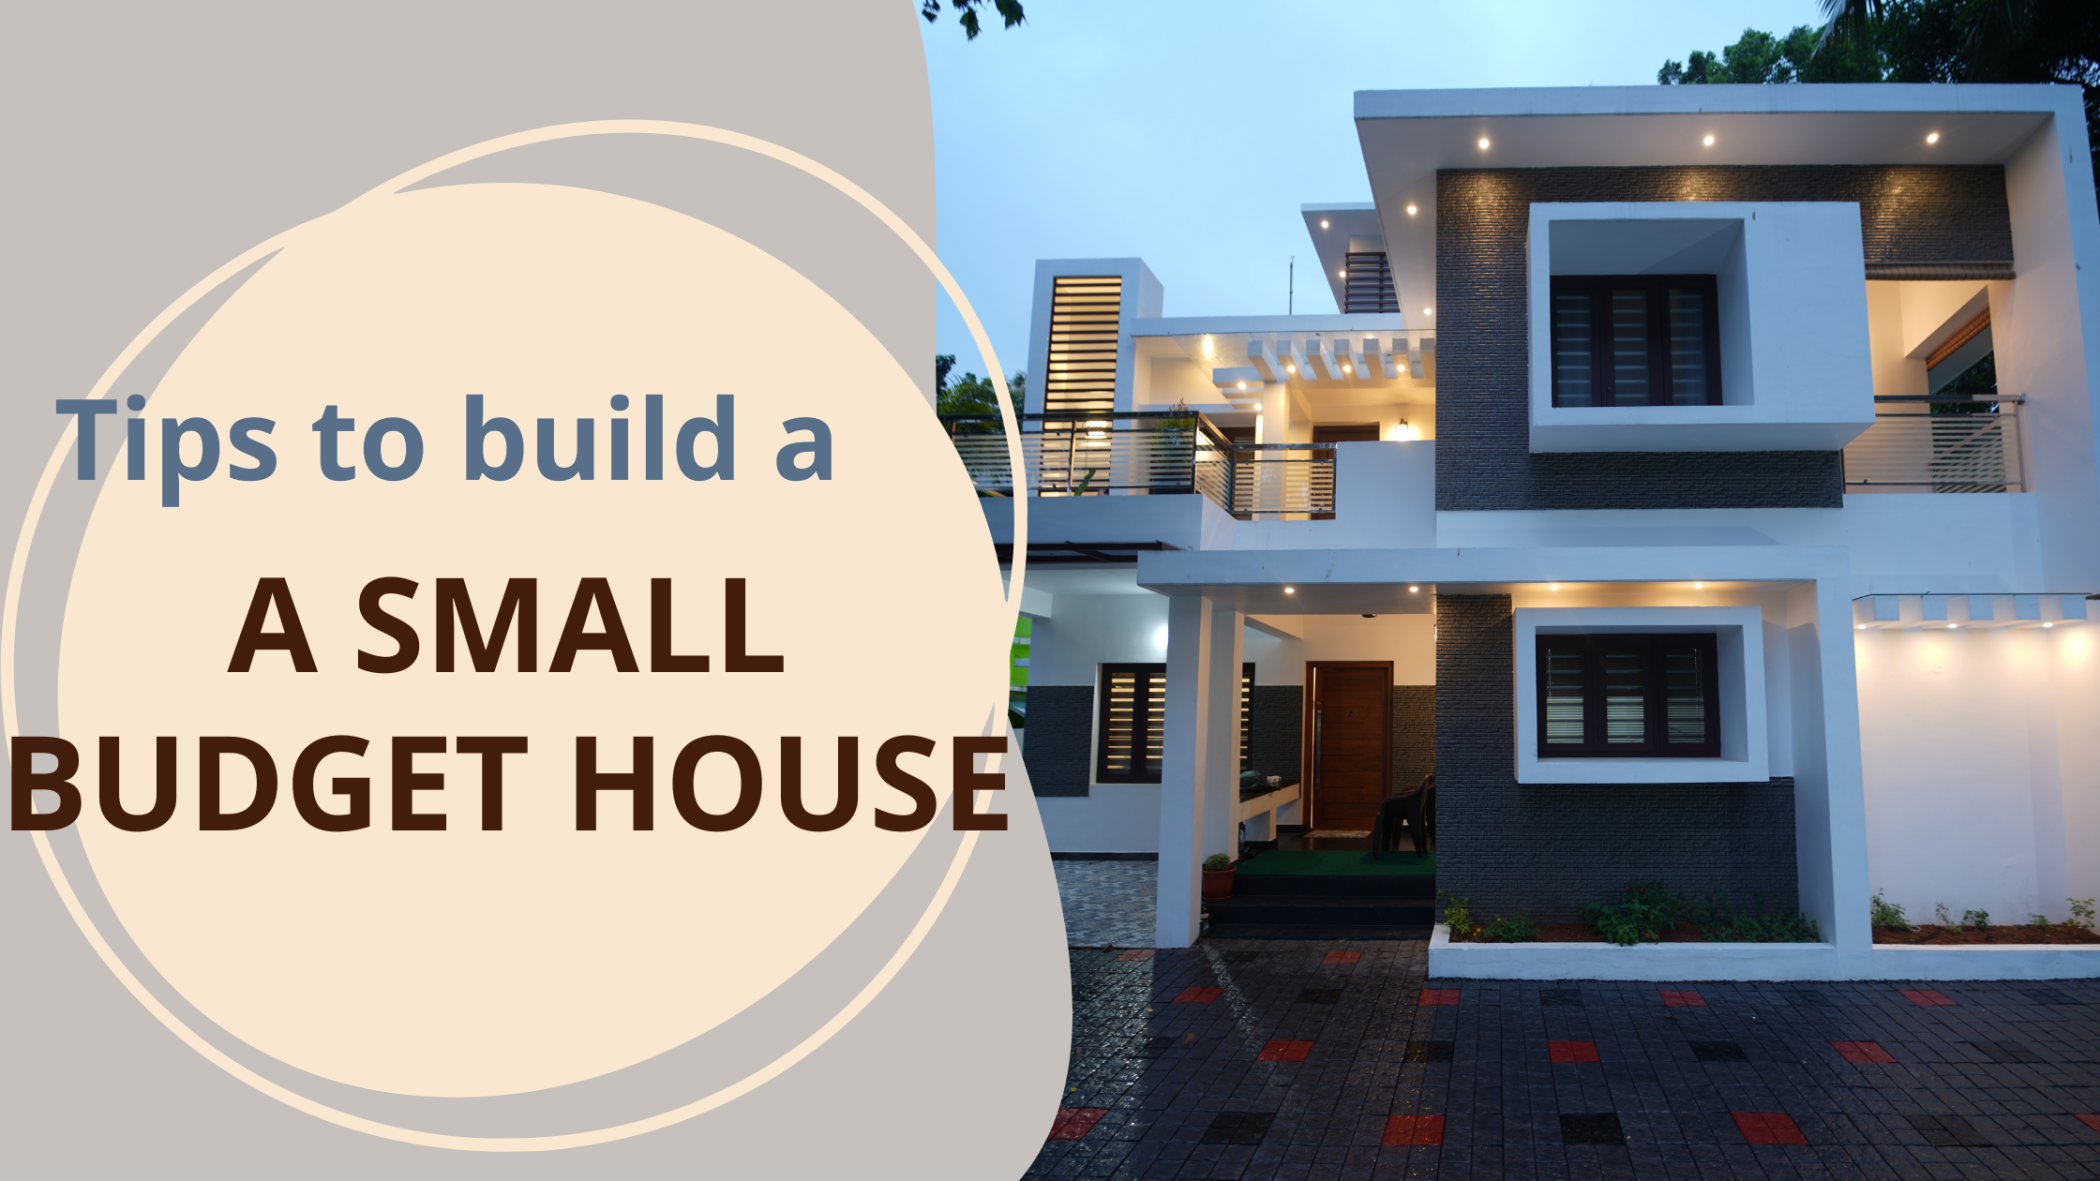 Small budget house construction tips | Viya Constructions